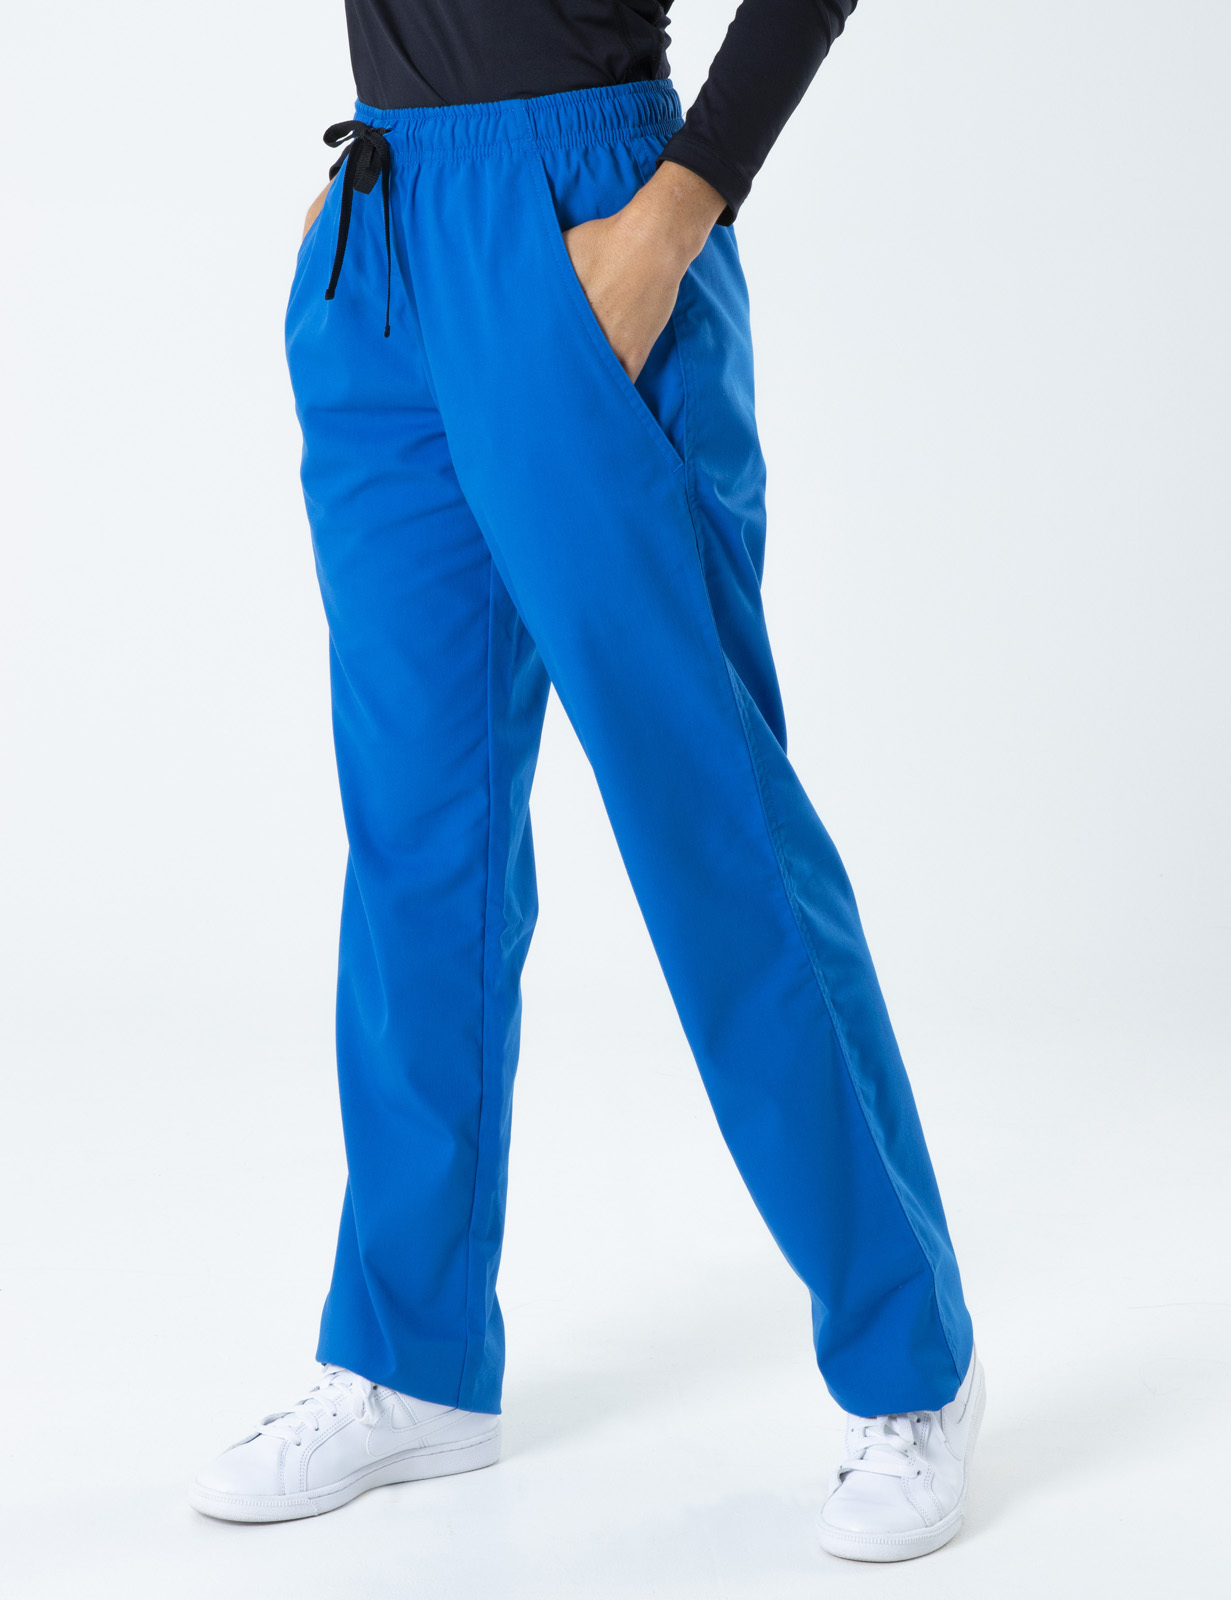 Women's Regular Cut Pants - Royal - 4X large